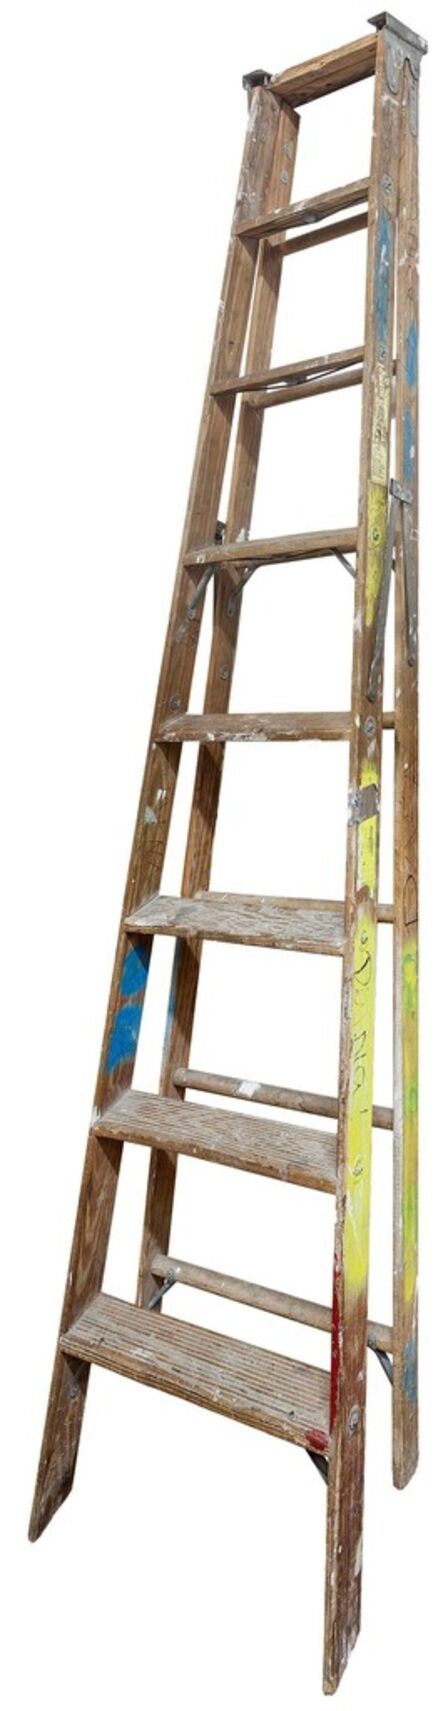 Jennifer Williams, ‘Large Folding Ladder: Wooden with Paint’, 2014